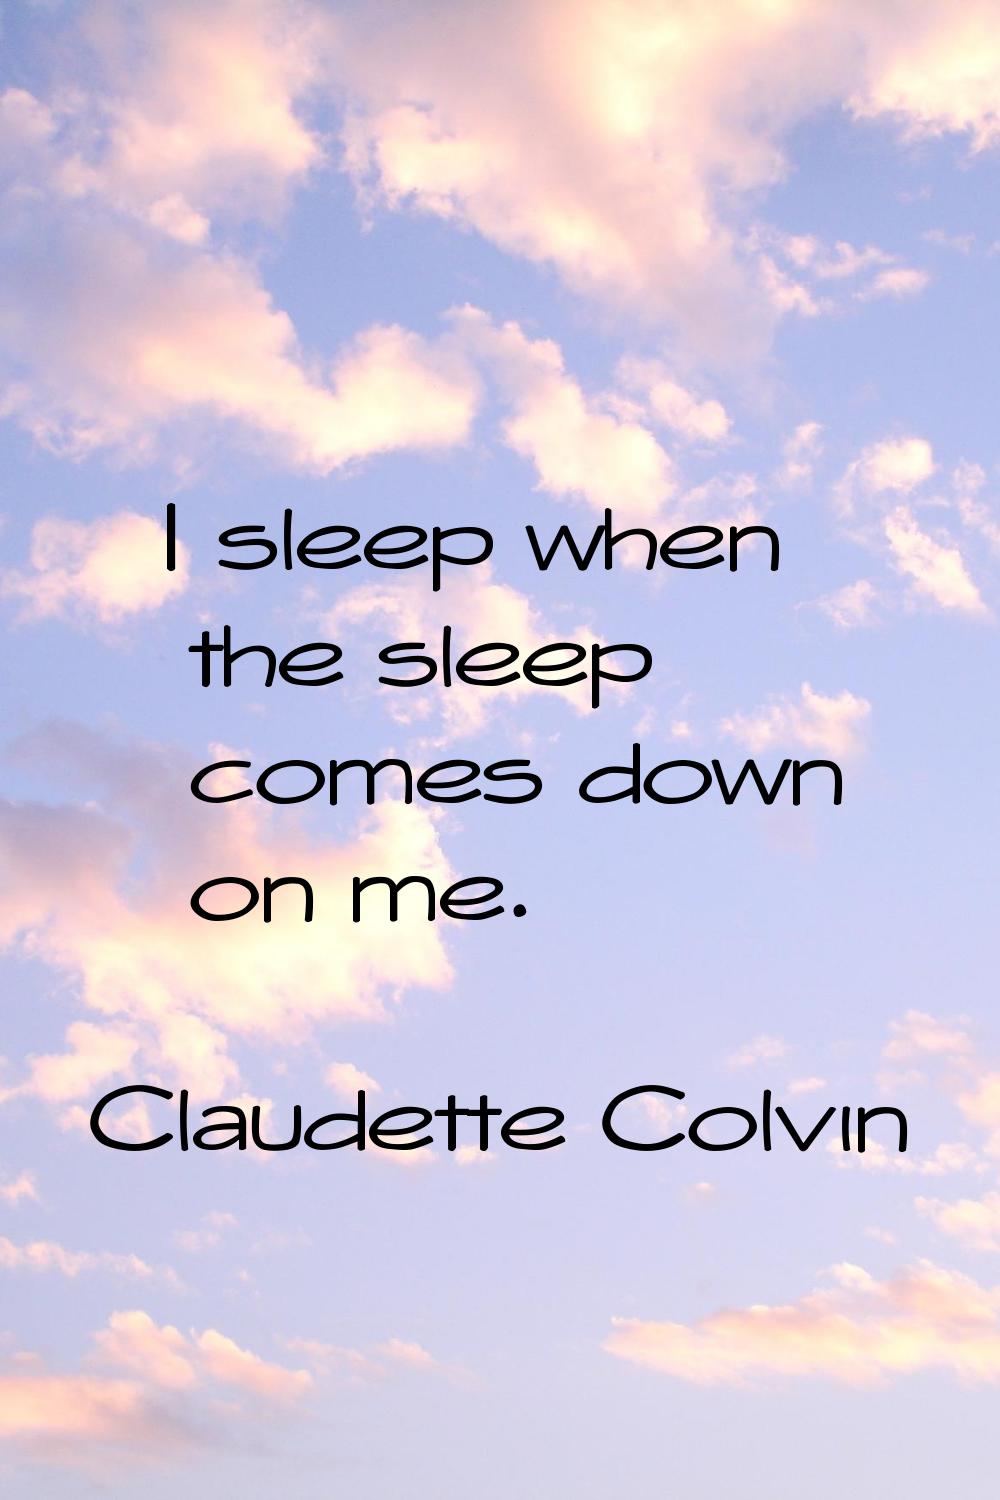 I sleep when the sleep comes down on me.